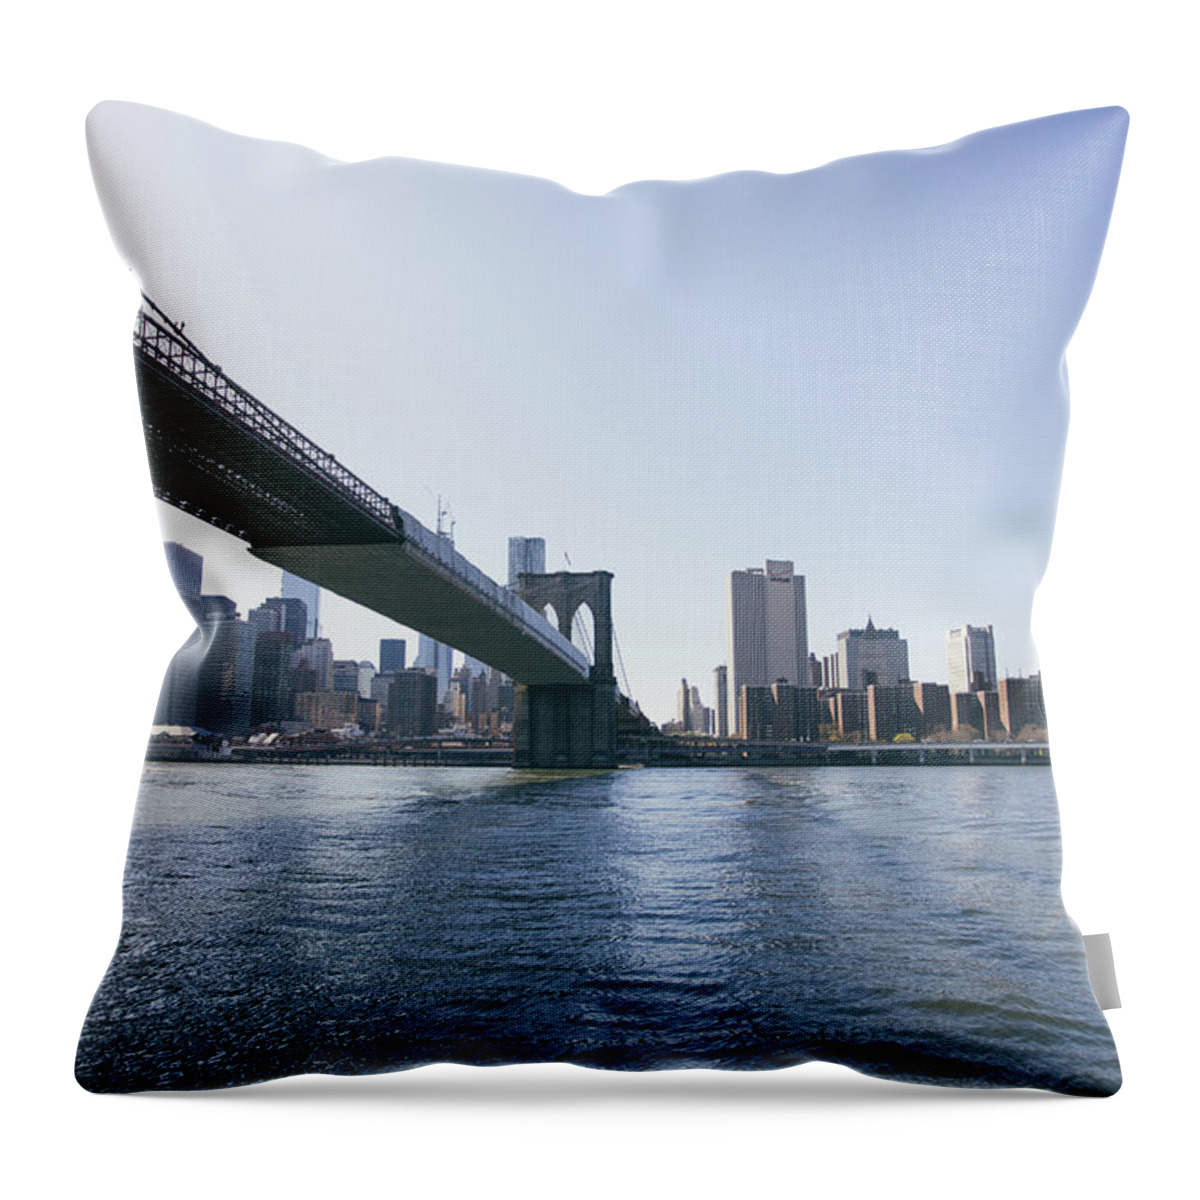 Lower Manhattan Throw Pillow featuring the photograph Brooklyn Bridge And Lower Manhattan by Tuan Tran